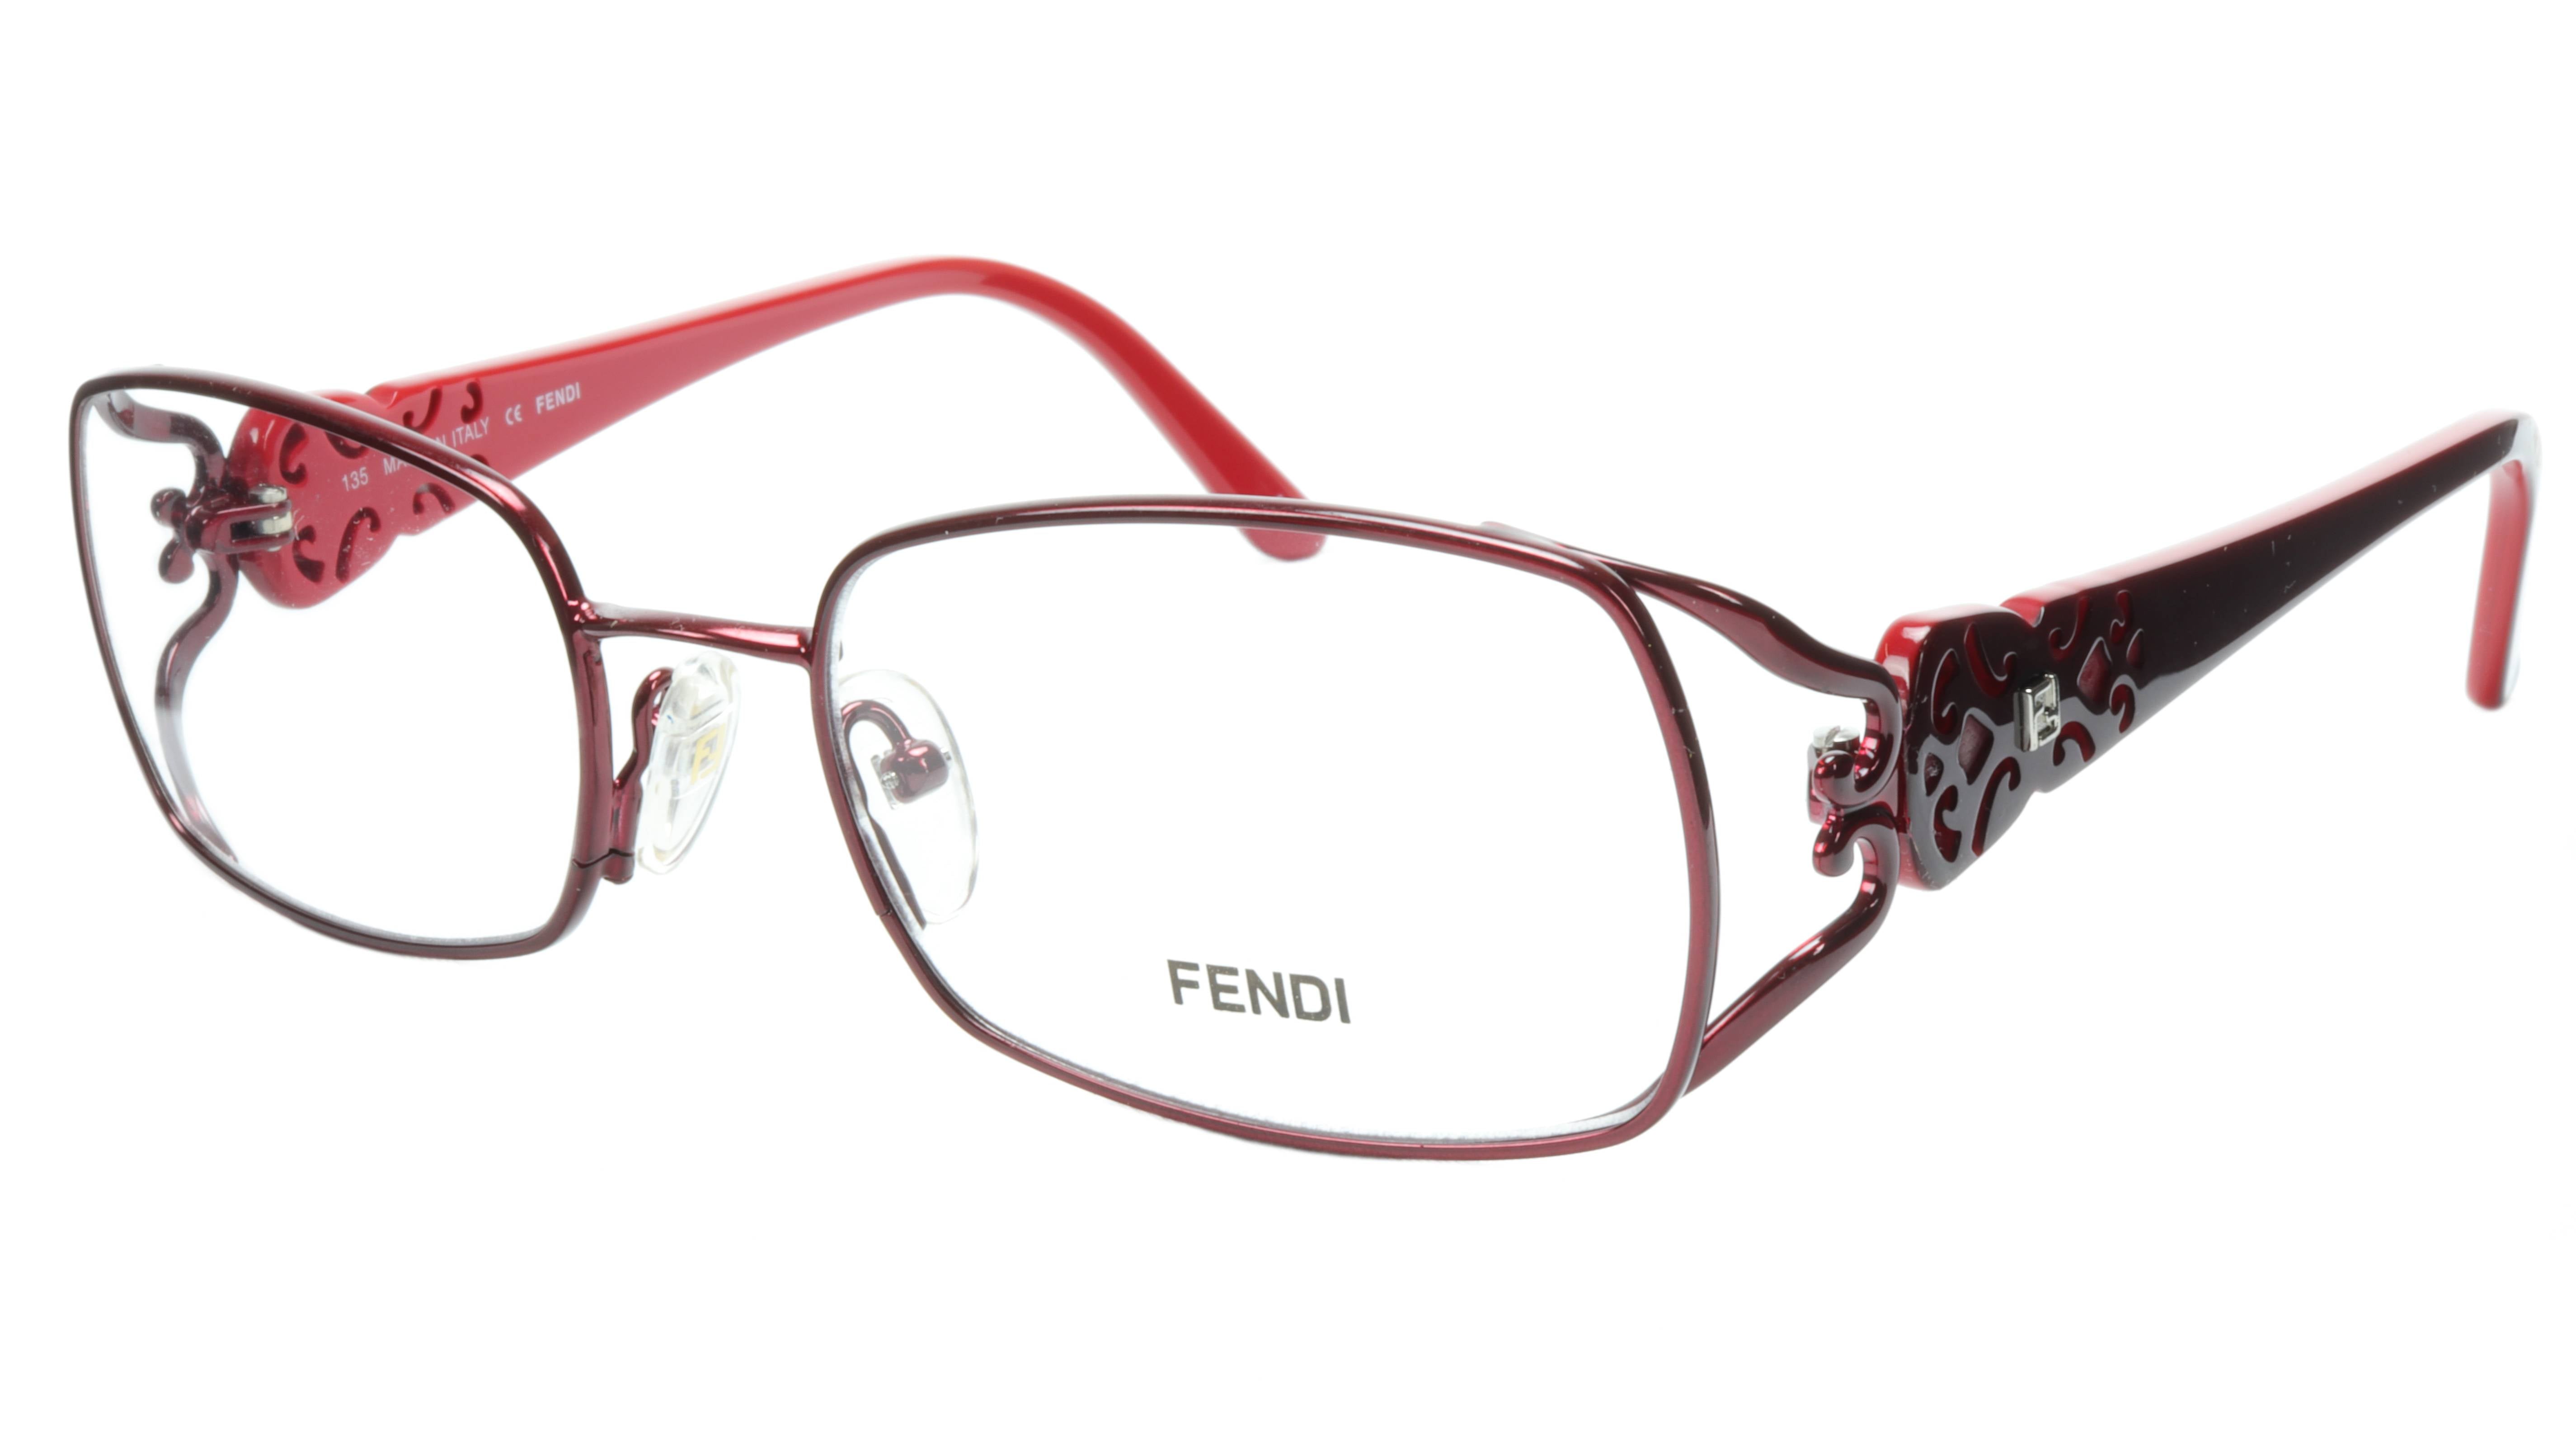       FENDI Eyewear with Decorative Bordeaux and Black Eyeglass Stems – Frame Bay